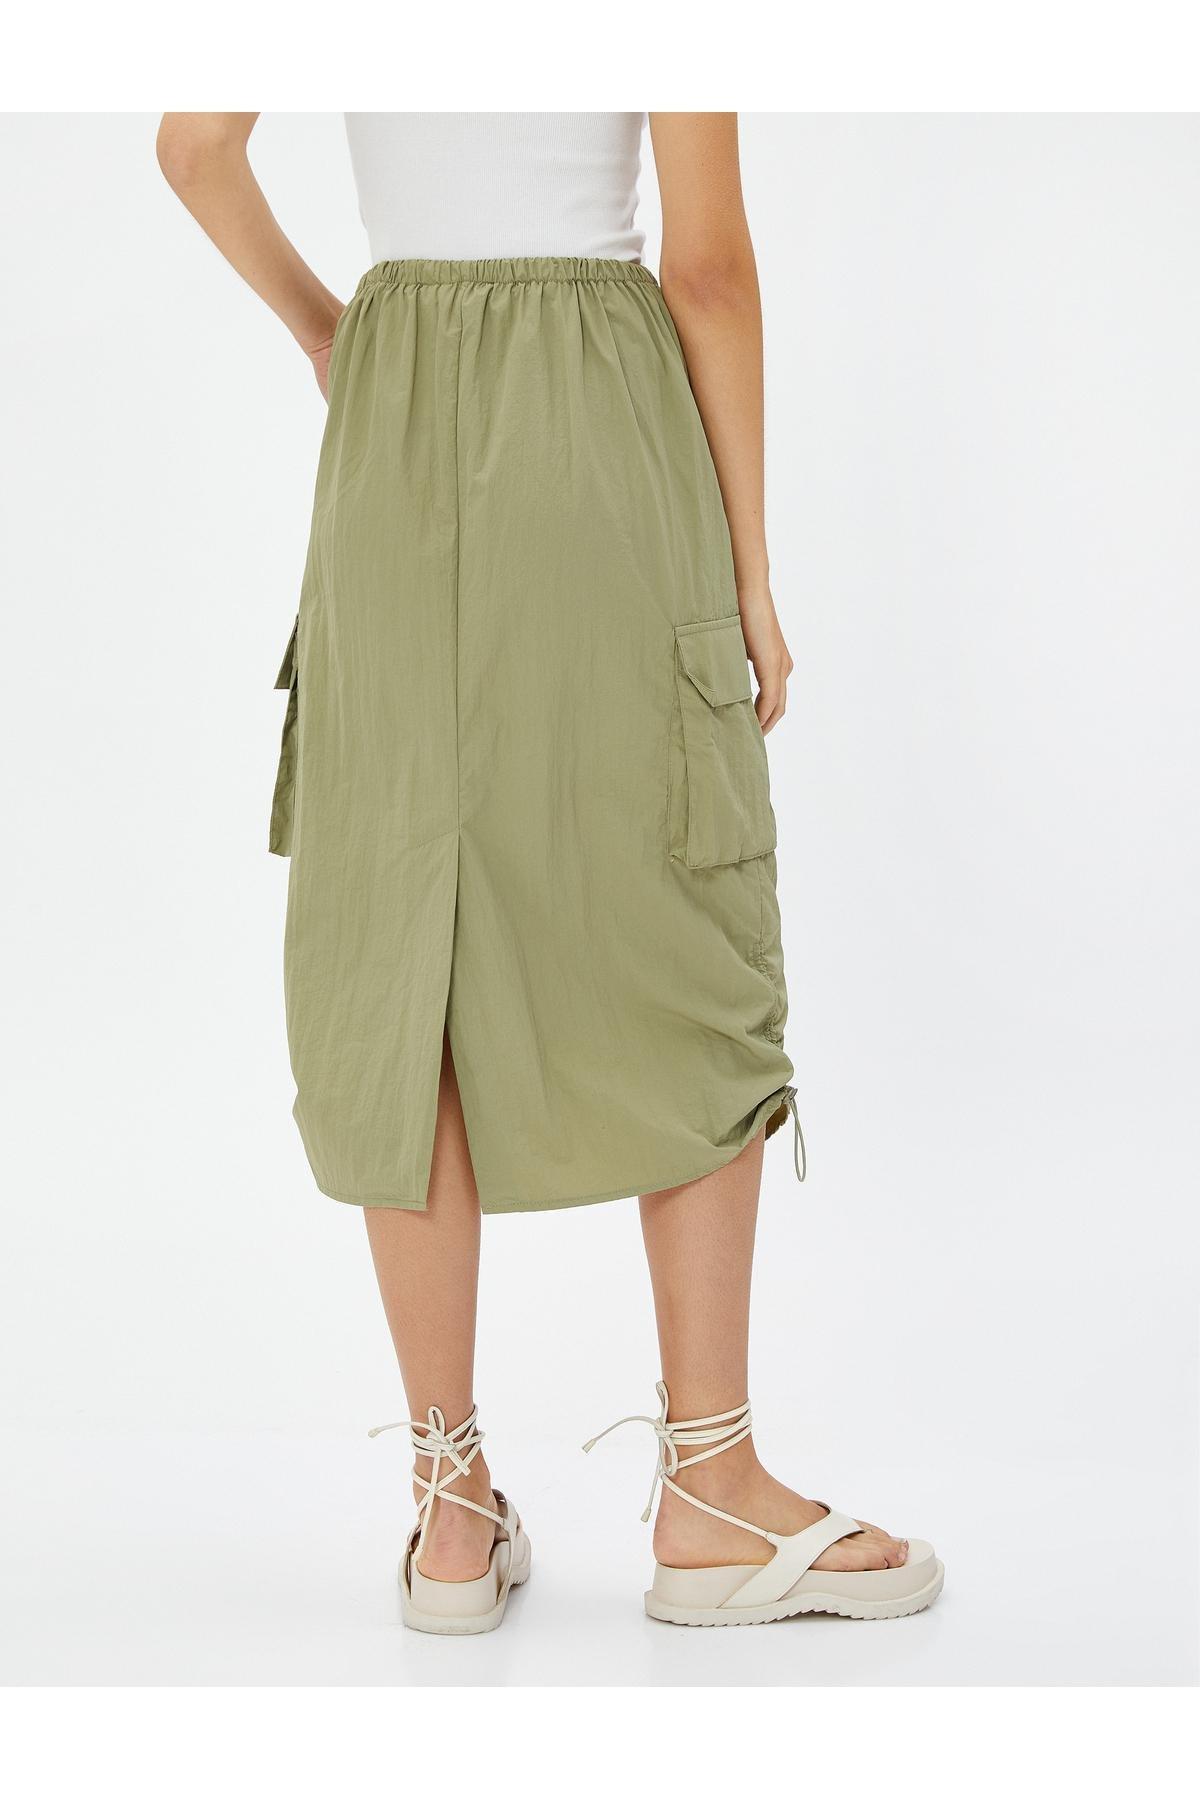 Koton - Green Parachute Skirt